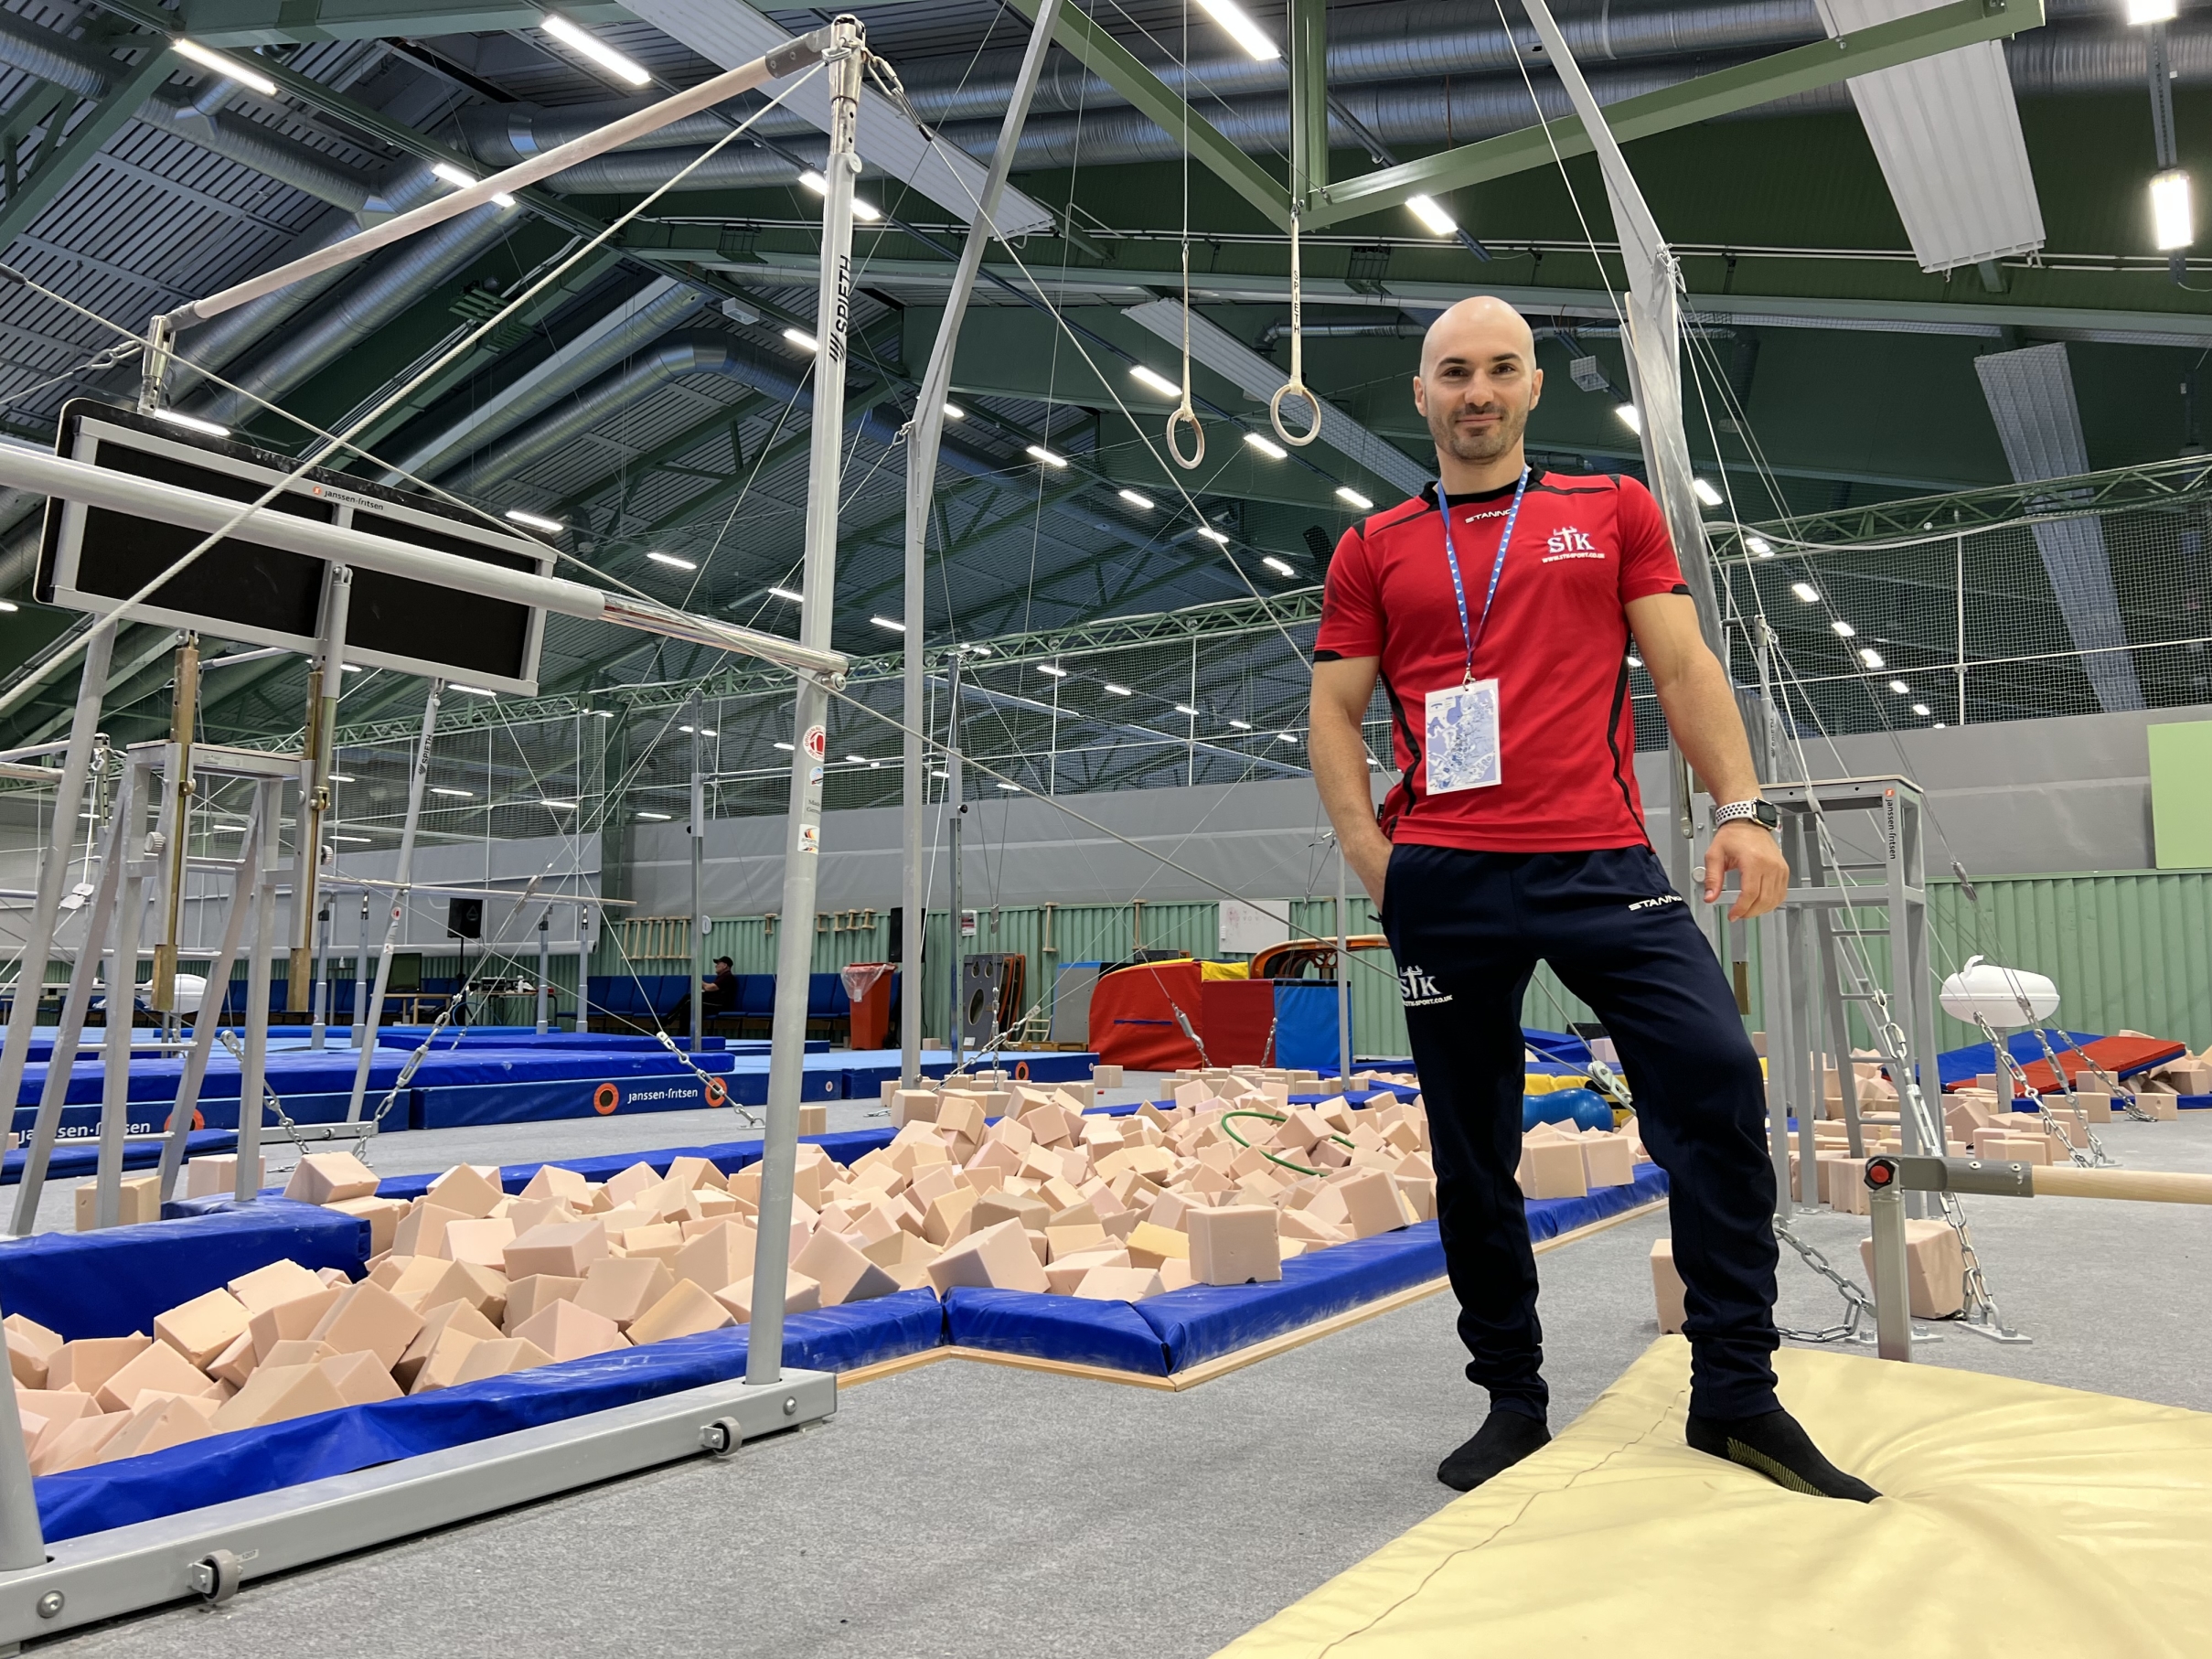 Stefan Kolimechkov at the Gymnastics Centre in the Sport Institute of Finland, Vierumaki 2022